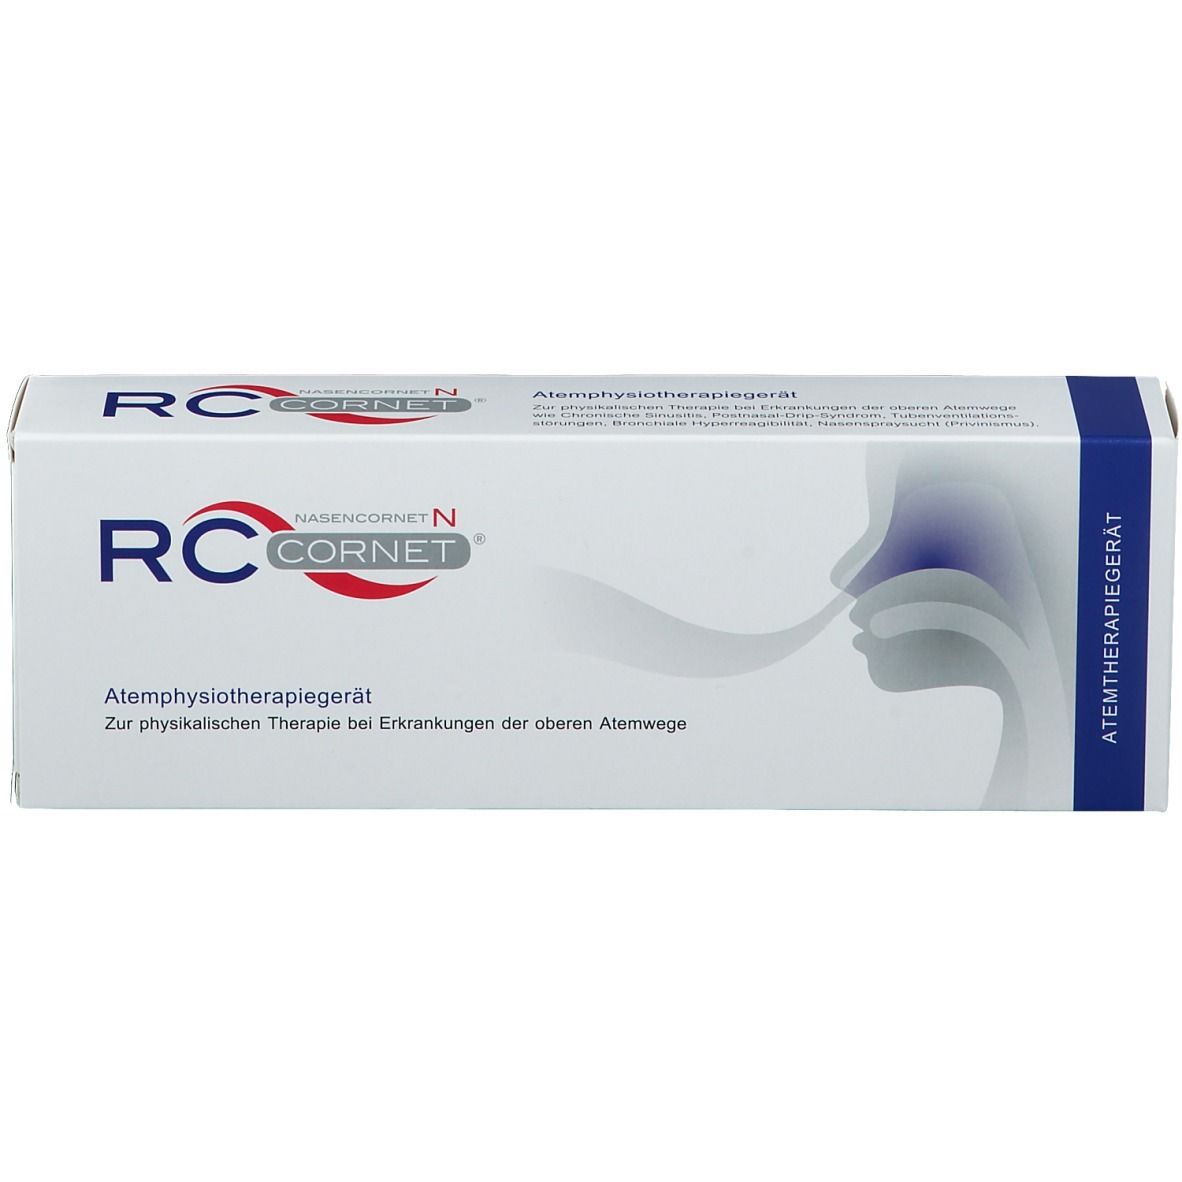 RC-Cornet® N Nasencornet